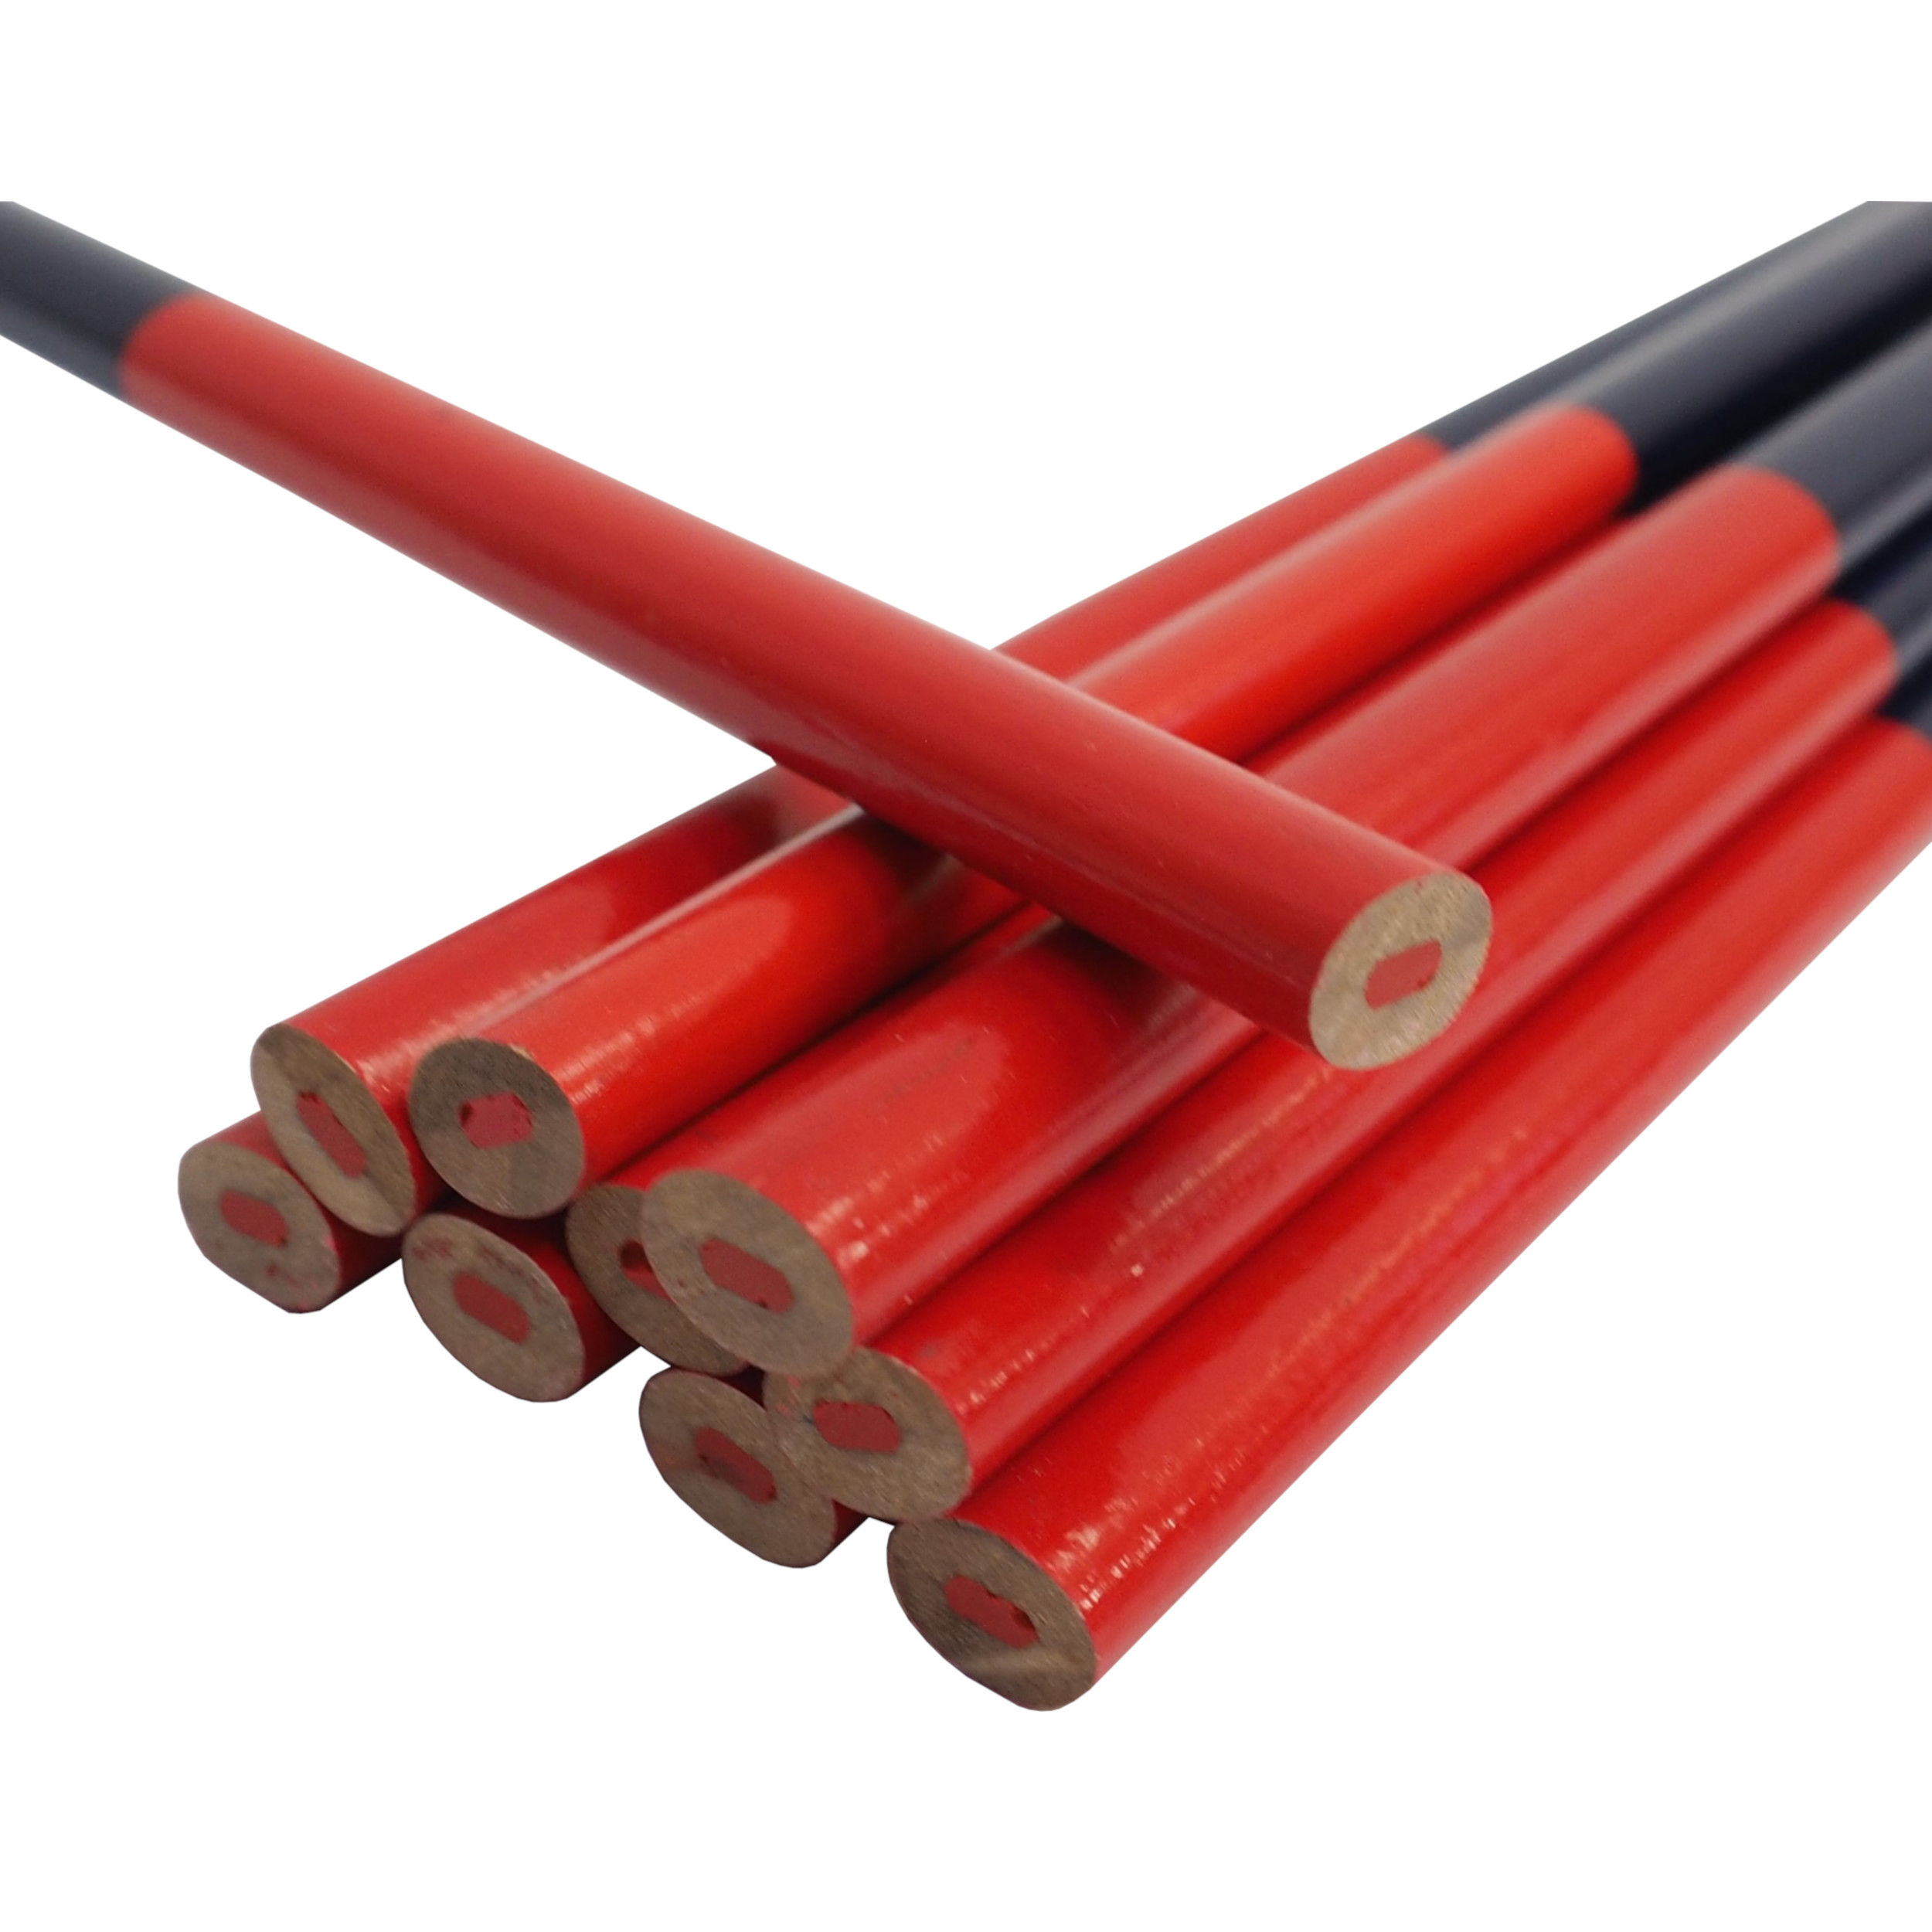 TOPTRADE tužka tesařská, ovál, červenomodrá, sada 12 ks, 180 mm 0.09 Kg TOP Sklad4 600202 529